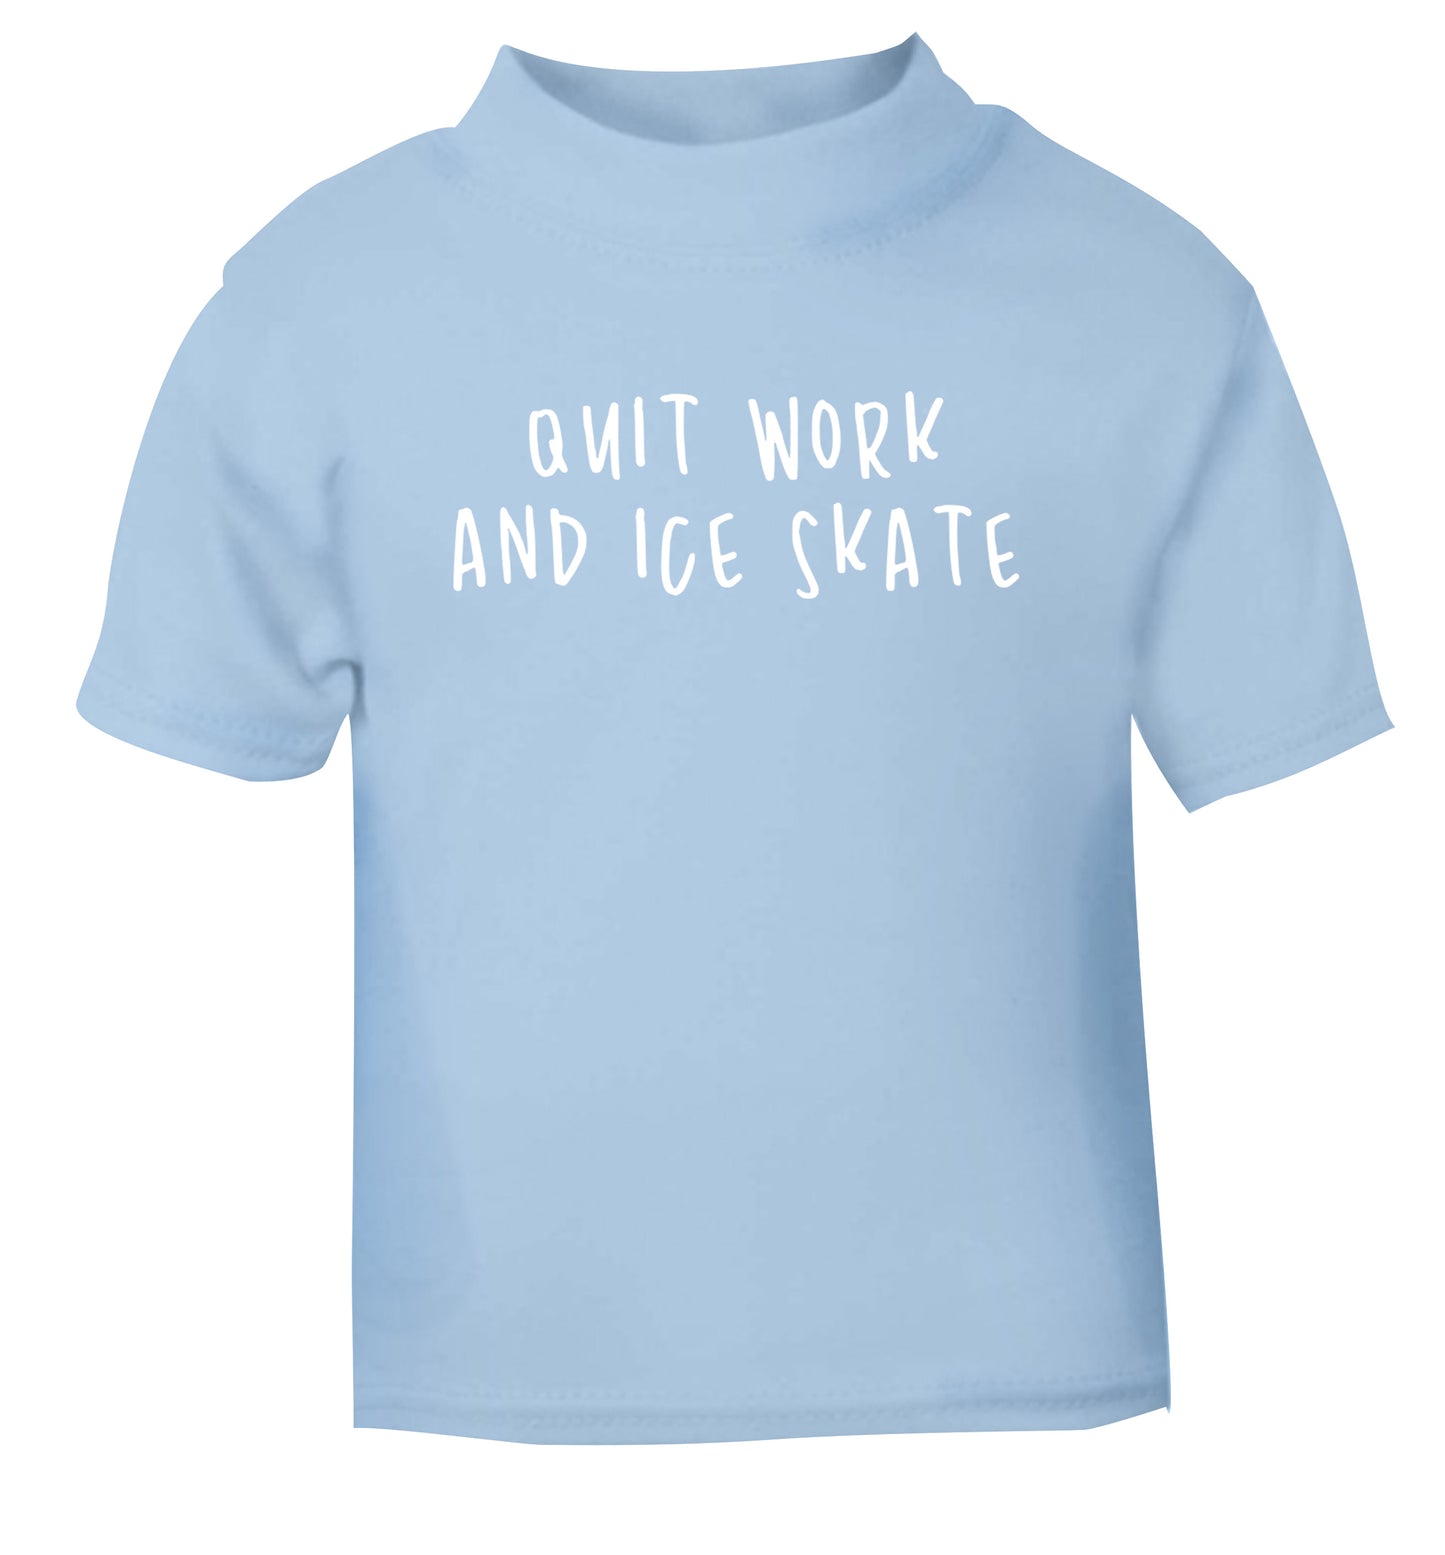 Quit work ice skate light blue Baby Toddler Tshirt 2 Years